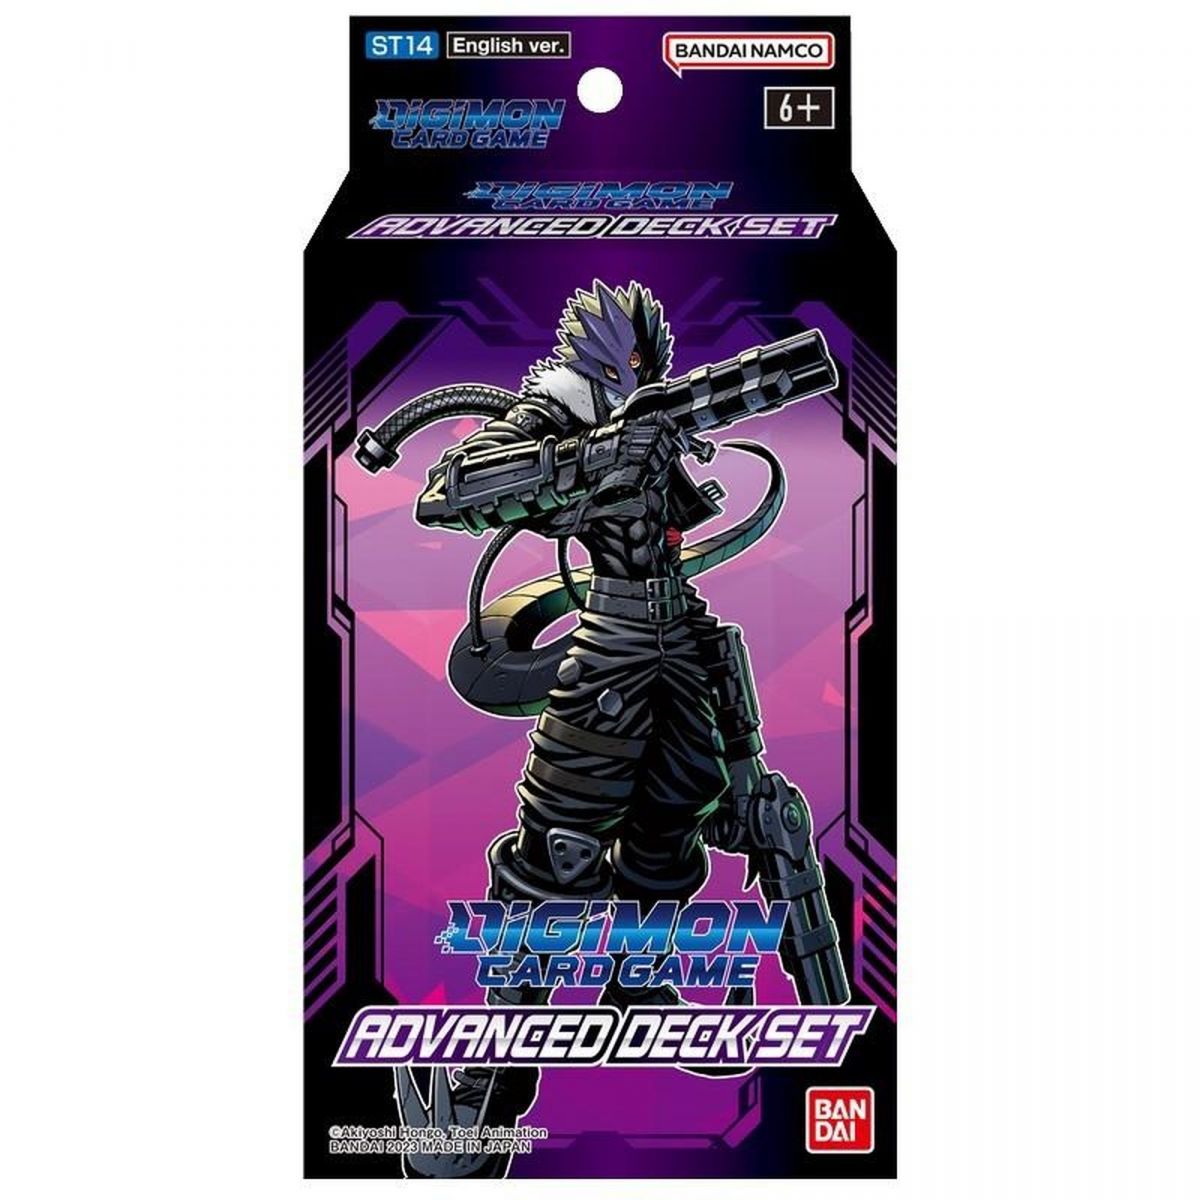 Digimon Card Game - Advanced Deck Set [ST14] - EN